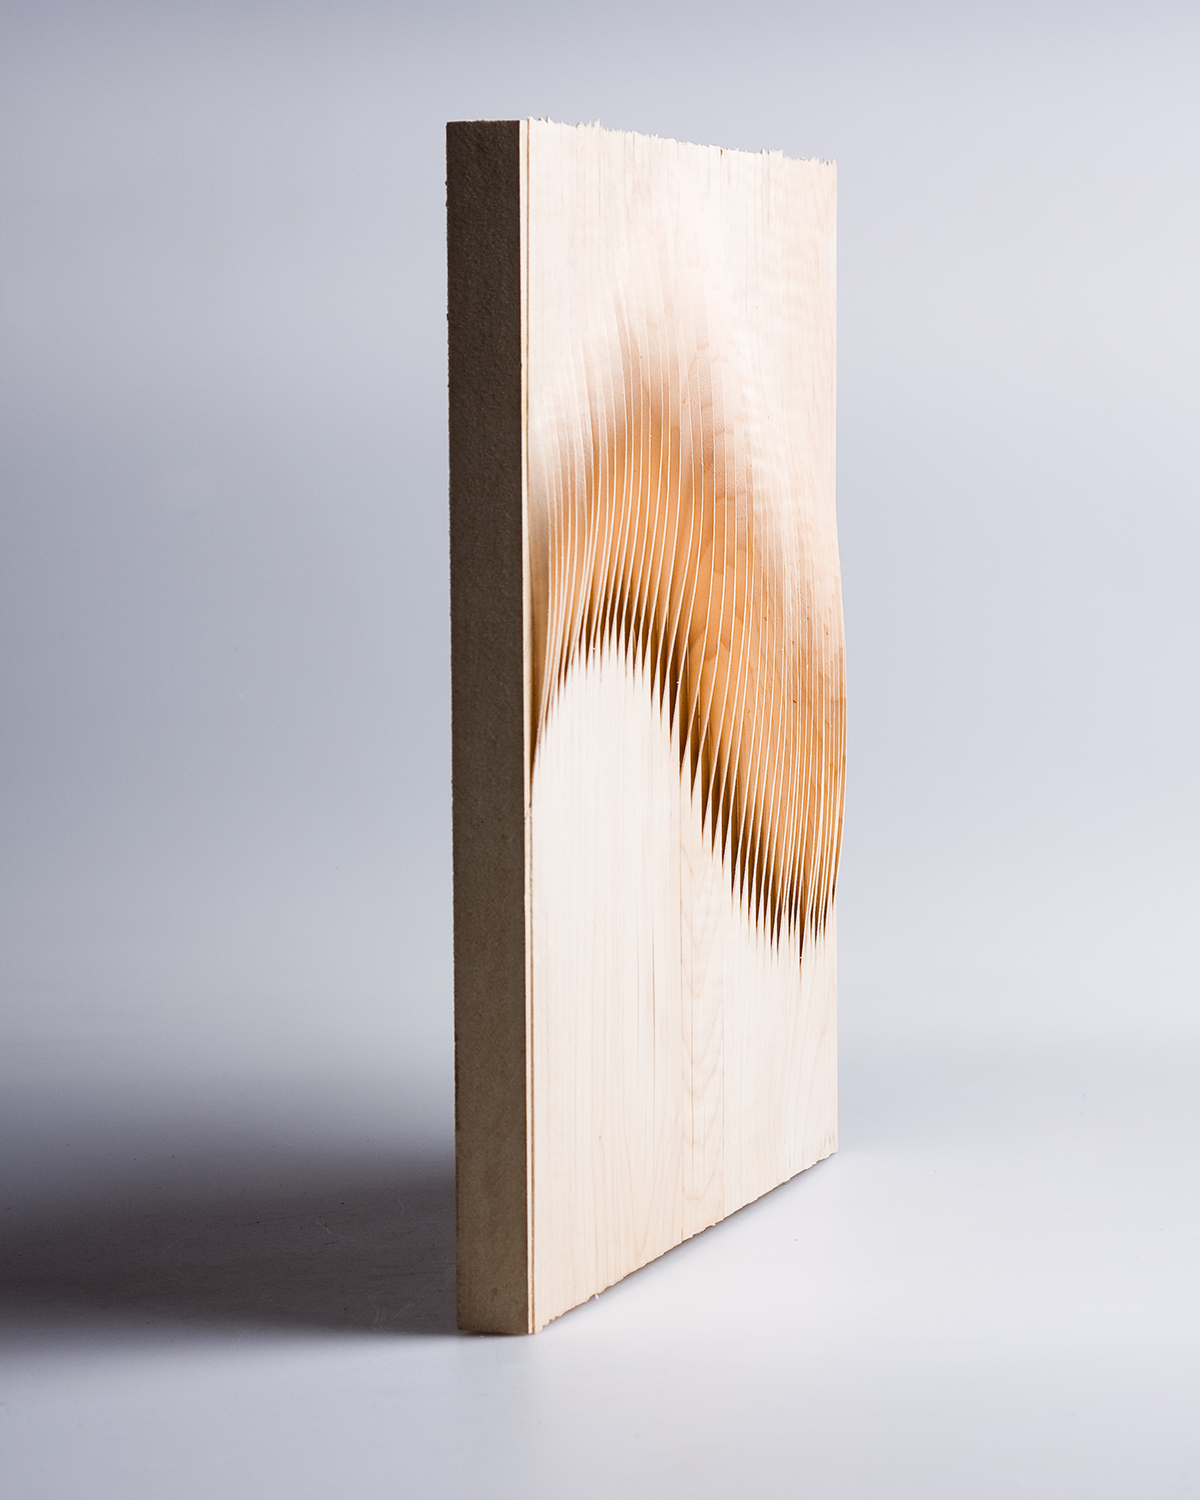 wave  Wood  paneling  optic illusion  tile  hg  eliza mikus  interior finnagora  design contest